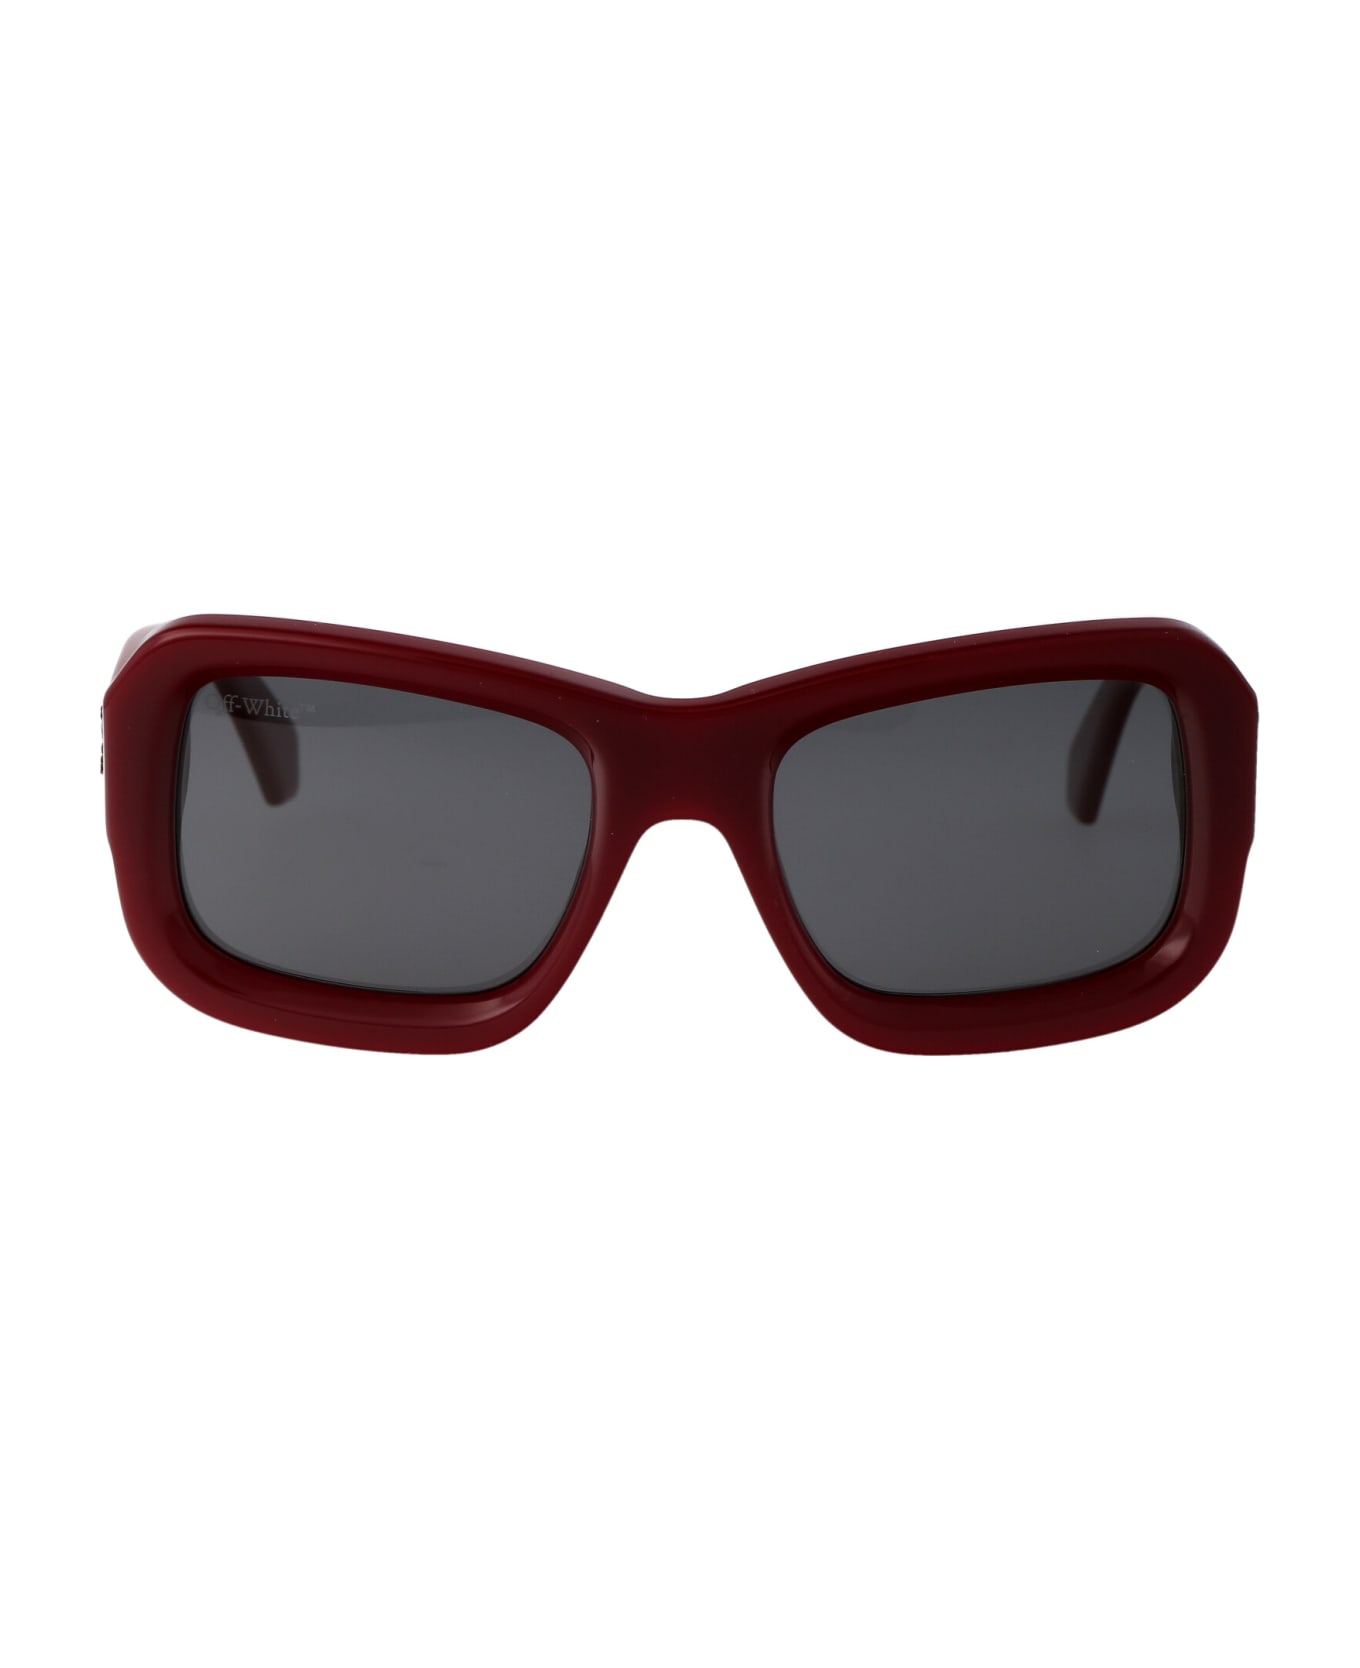 Off-White Verona Sunglasses - 2707 BURGUNDY